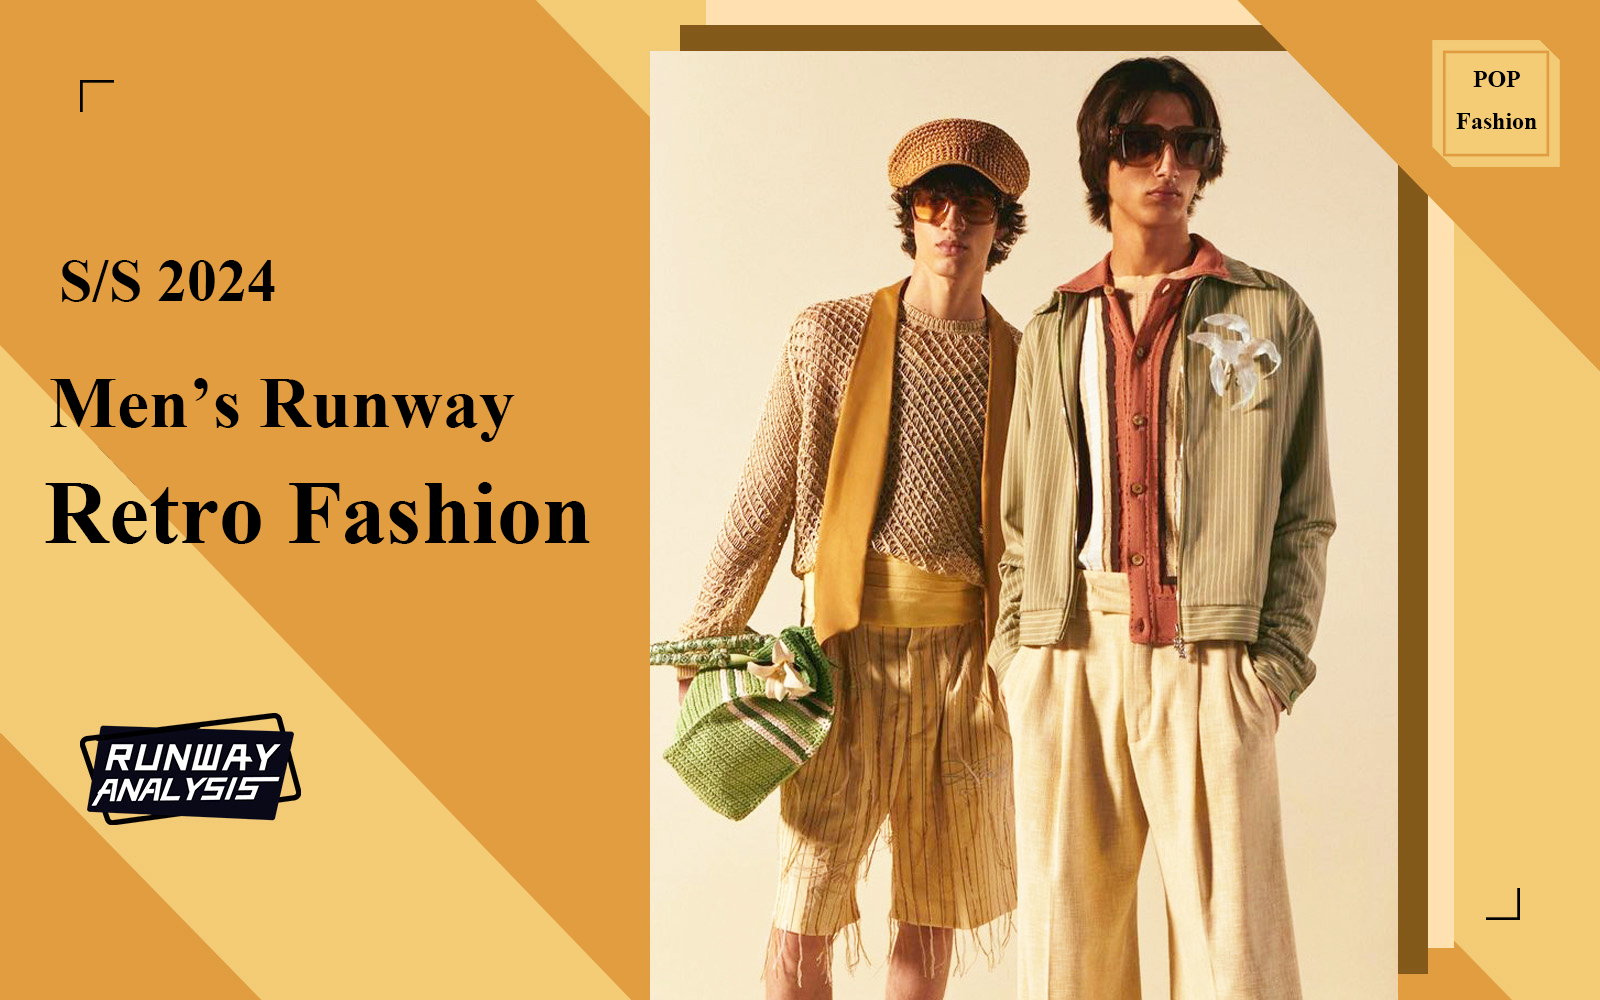 Retro Fashion -- The Comprehensive Analysis of Men's Runway